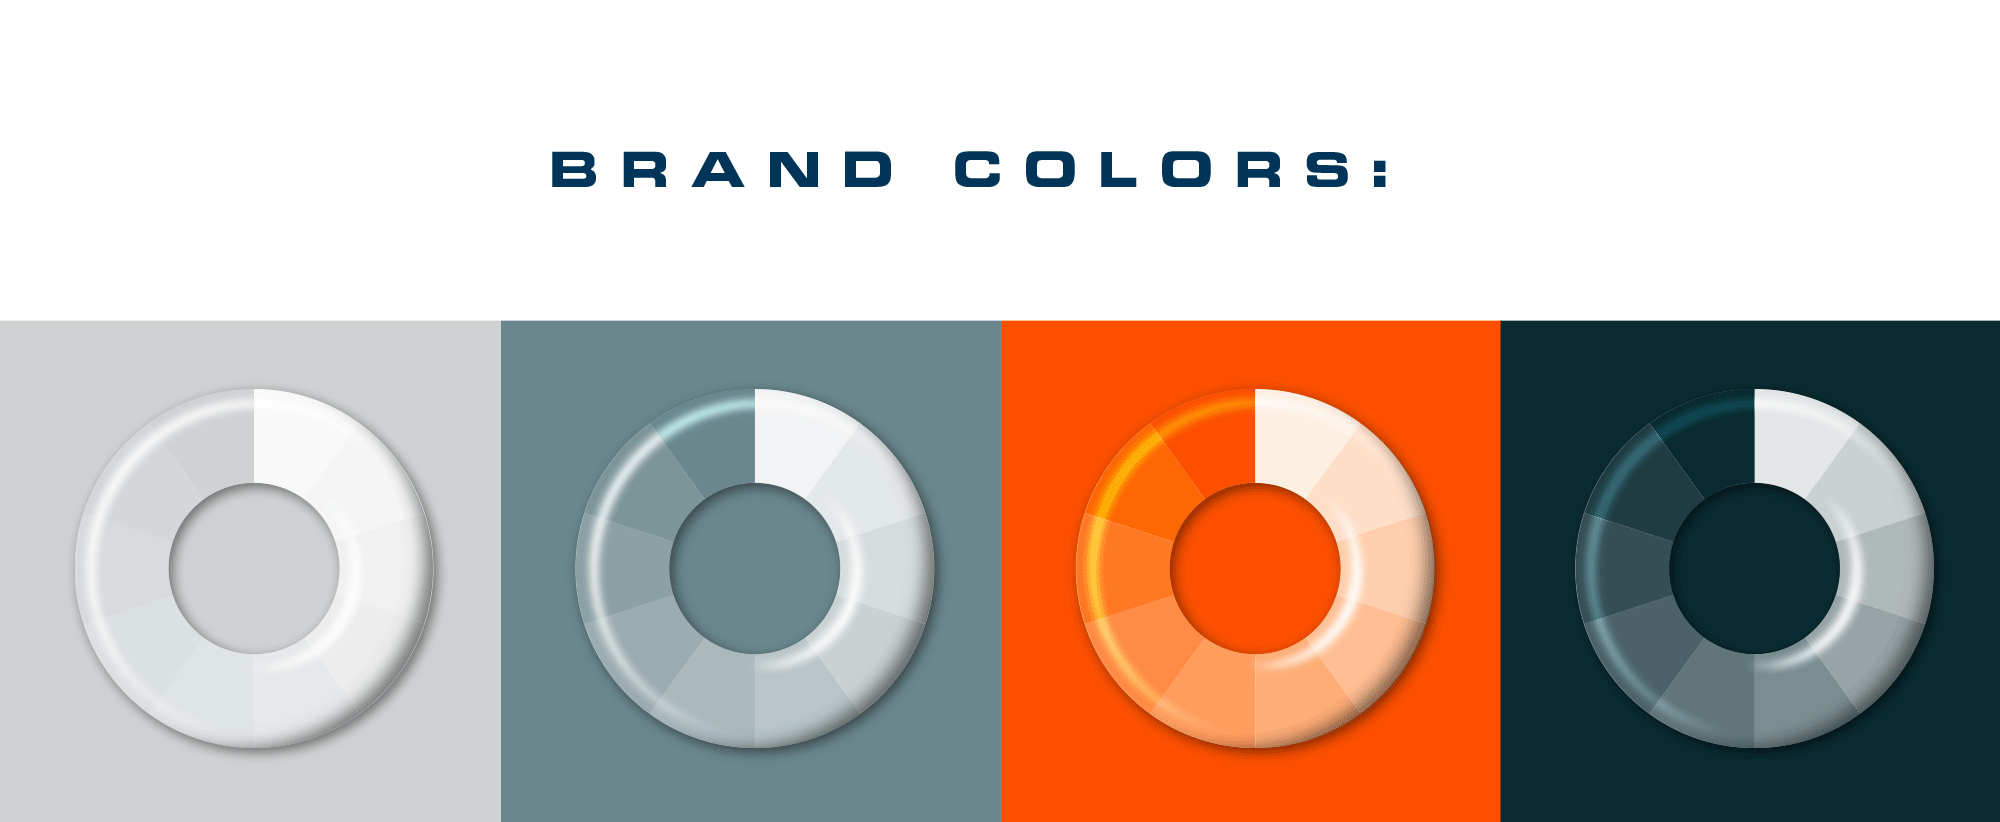 Integra brand colors